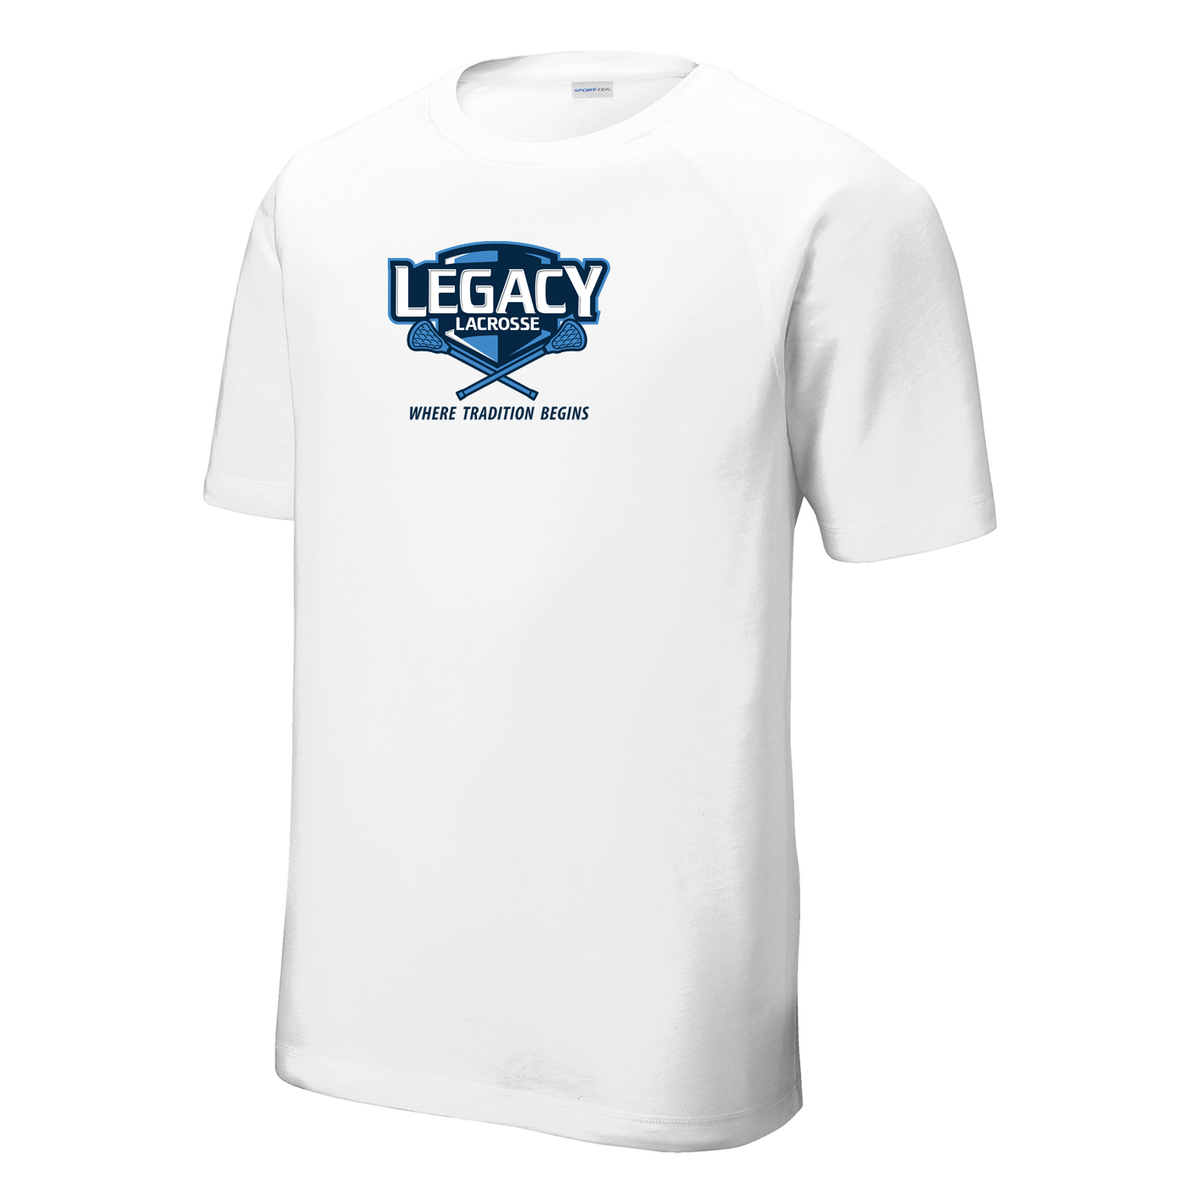 Legacy Lacrosse Raglan CottonTouch Tee